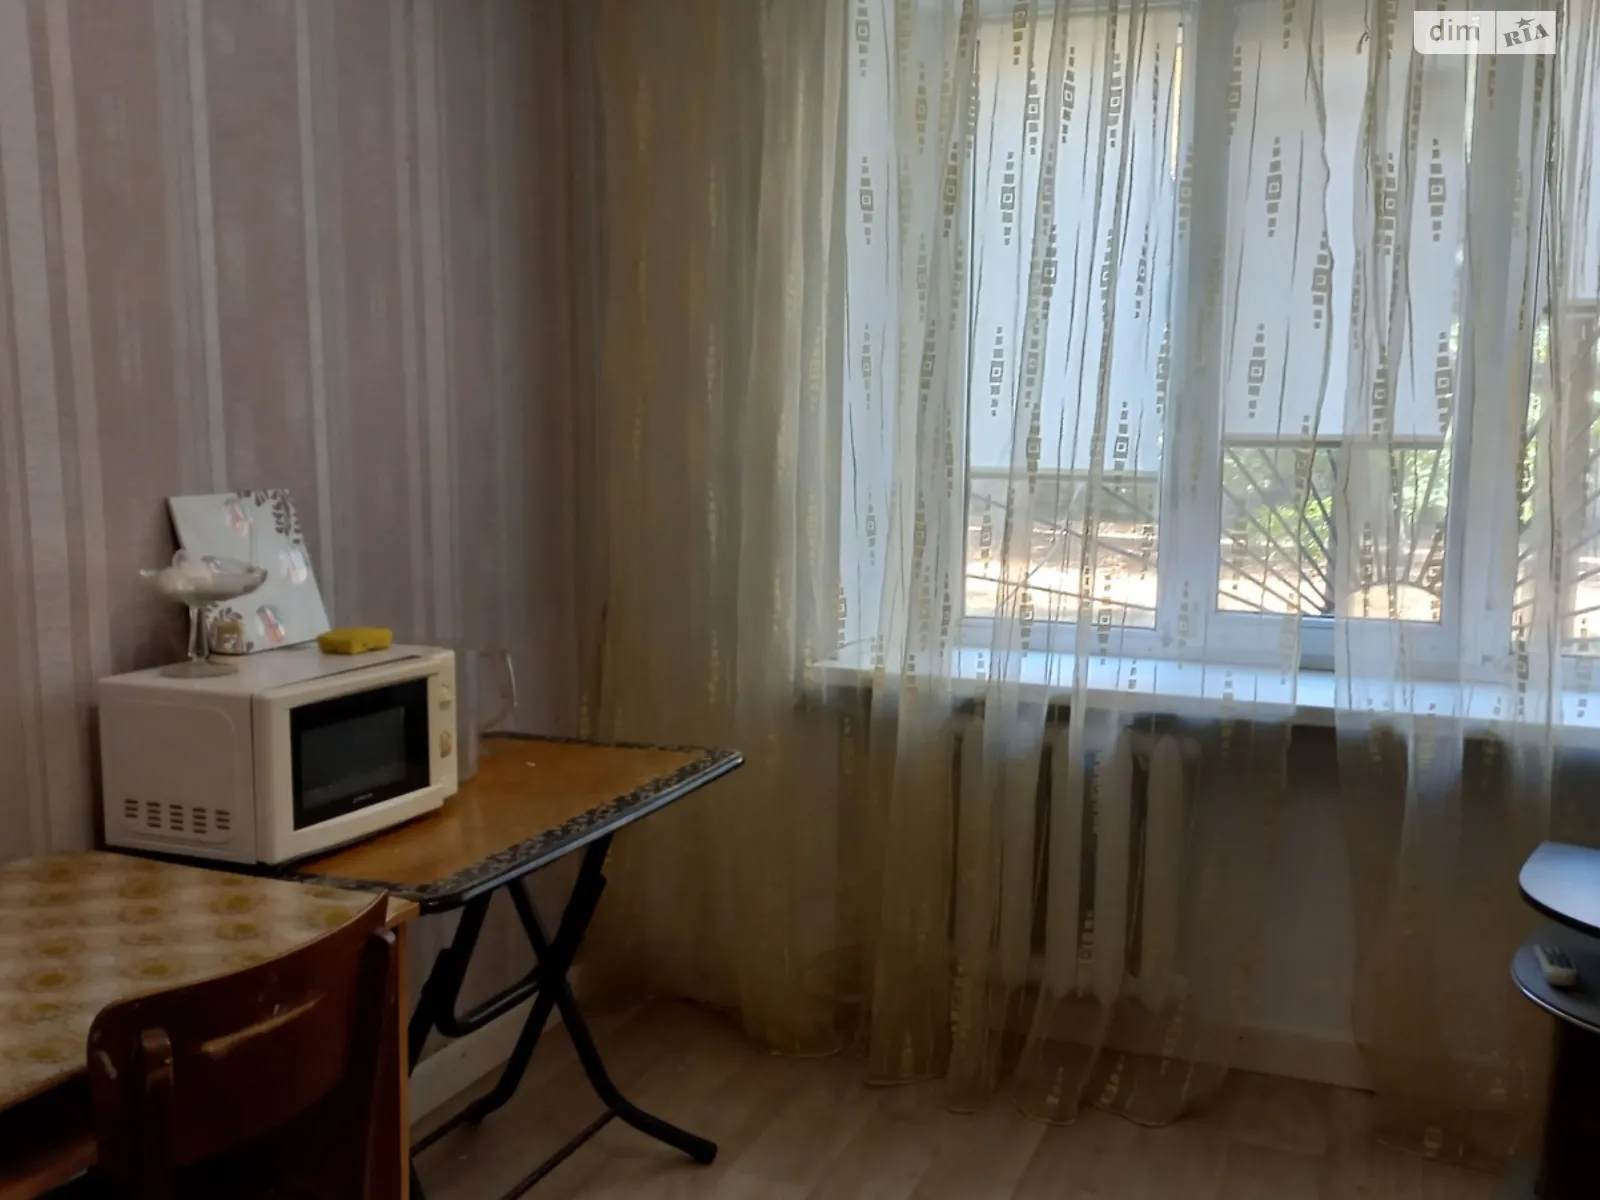 Продается комната 22 кв. м в Одессе, цена: 8000 $ - фото 1